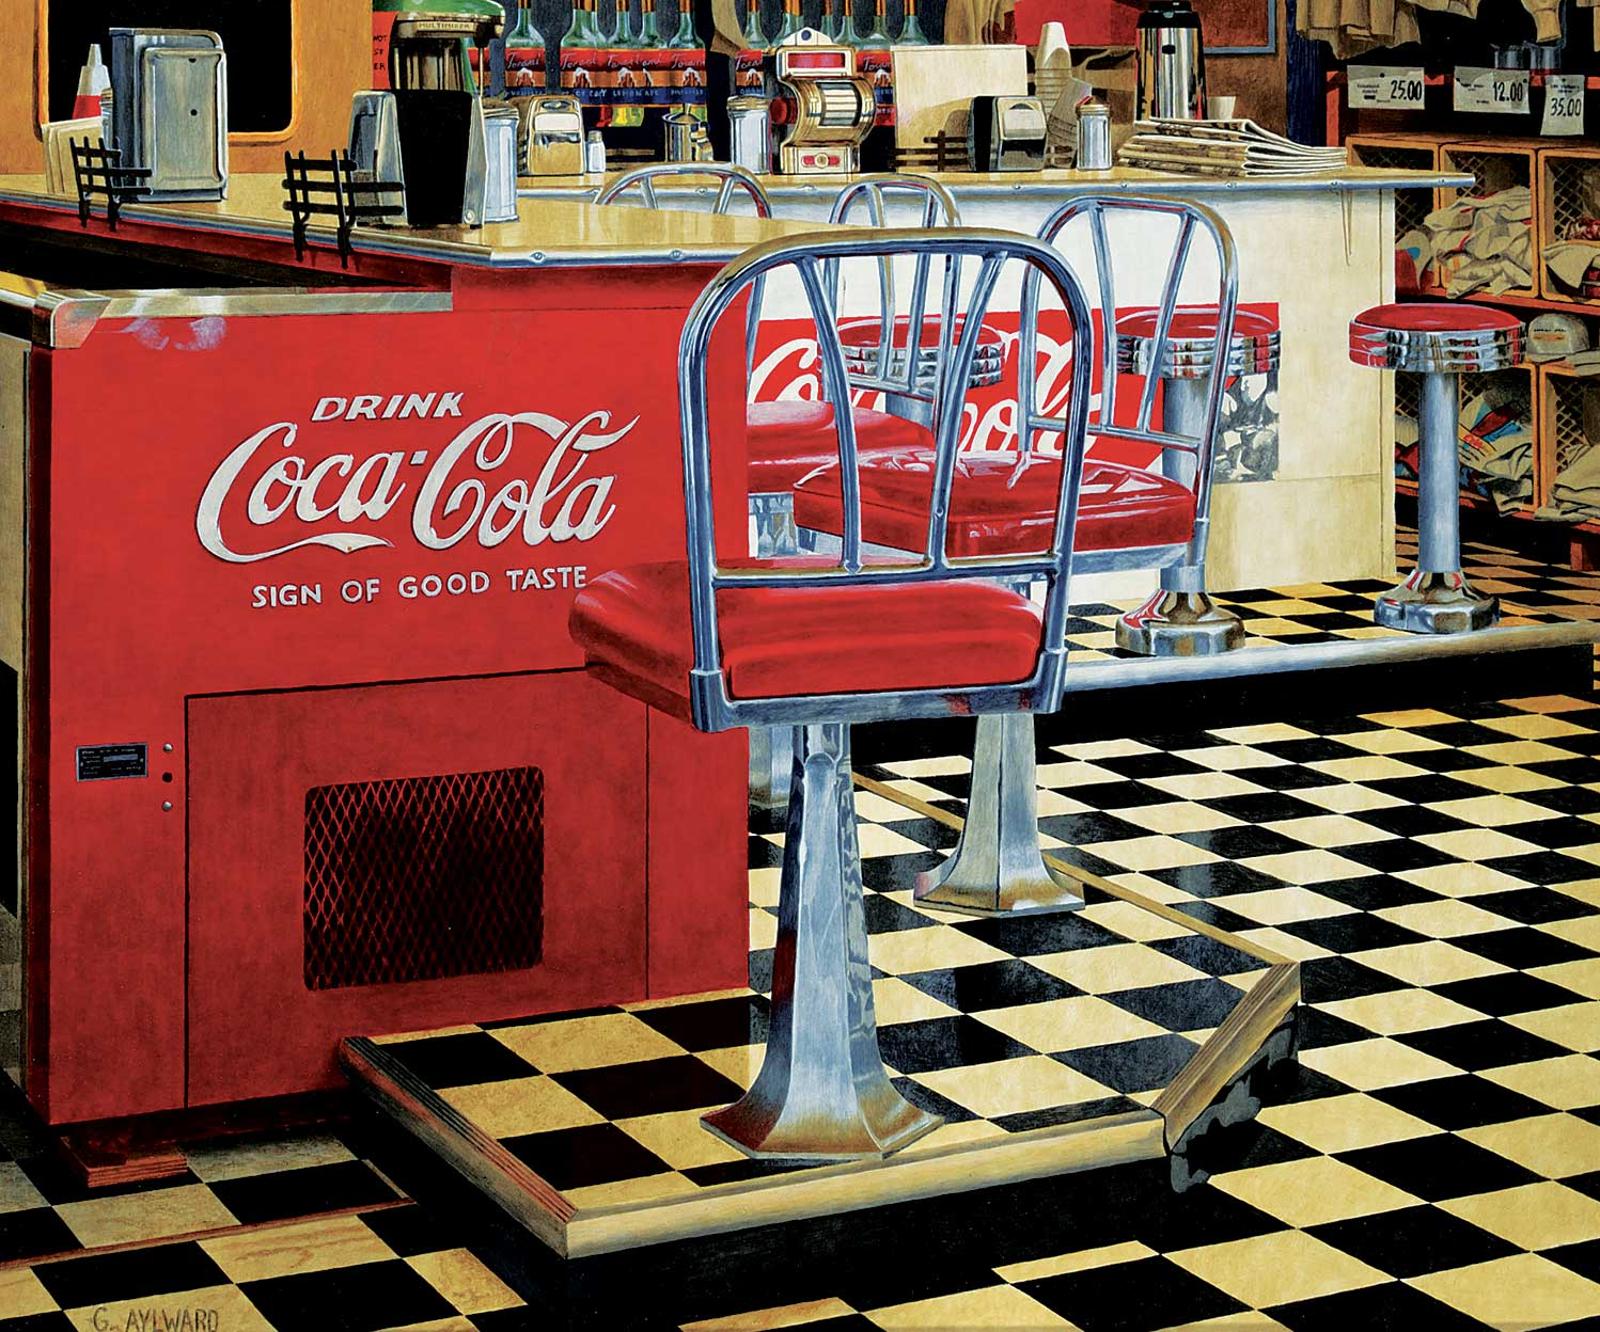 Gary Aylward - Untitled - Drink Coca Cola, Sign of Good Taste